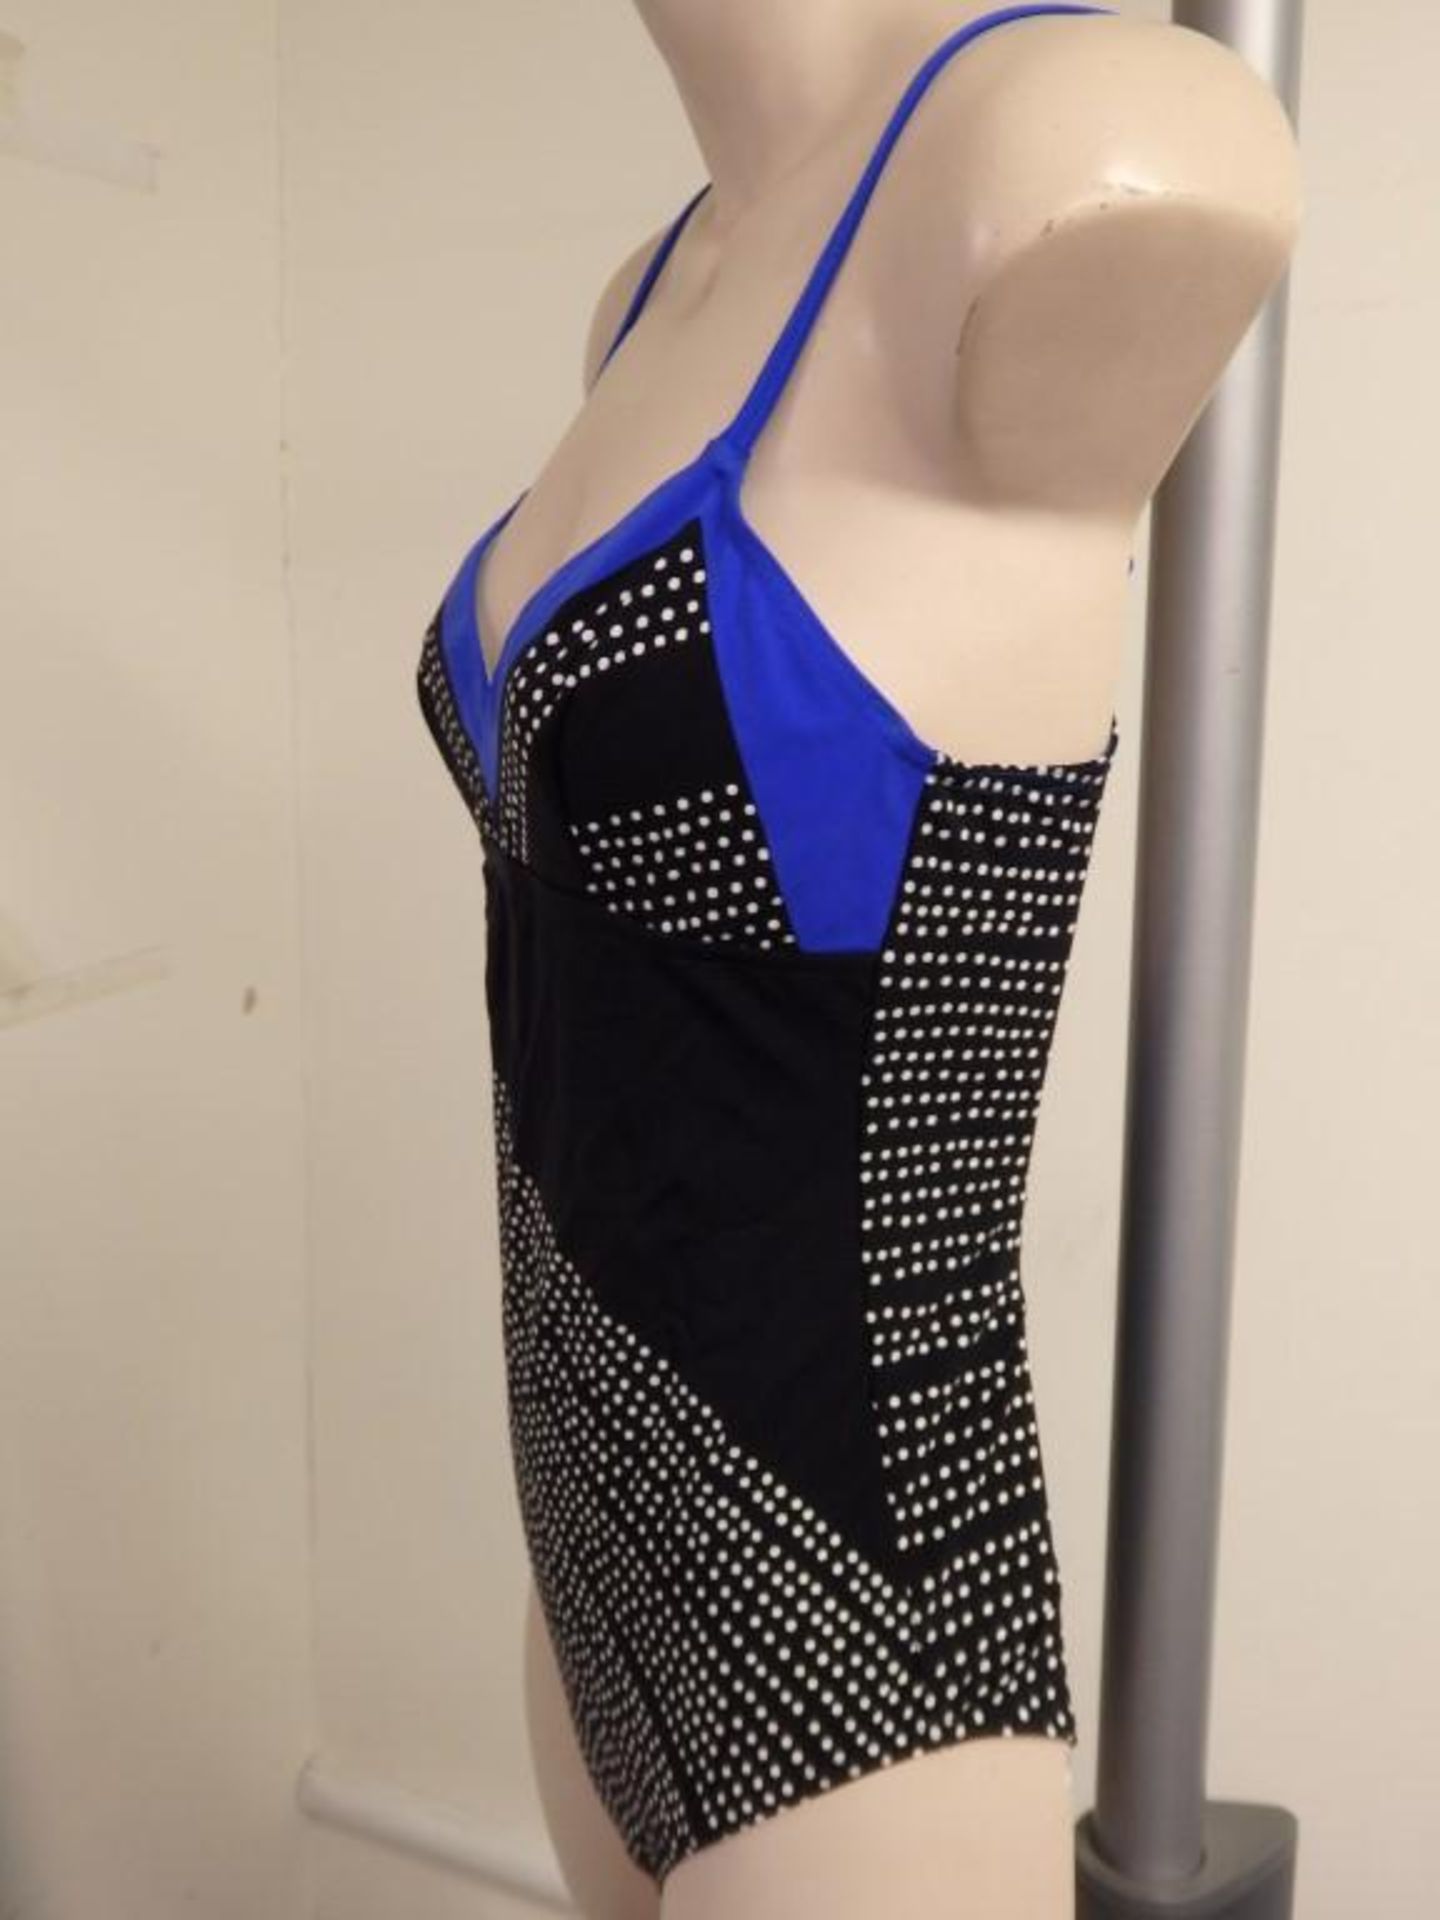 1 x Rasurel - Black Polka dot with royal blue trim &frill Tobago Swimsuit - B21039 - Size 2C - UK 32 - Image 6 of 8